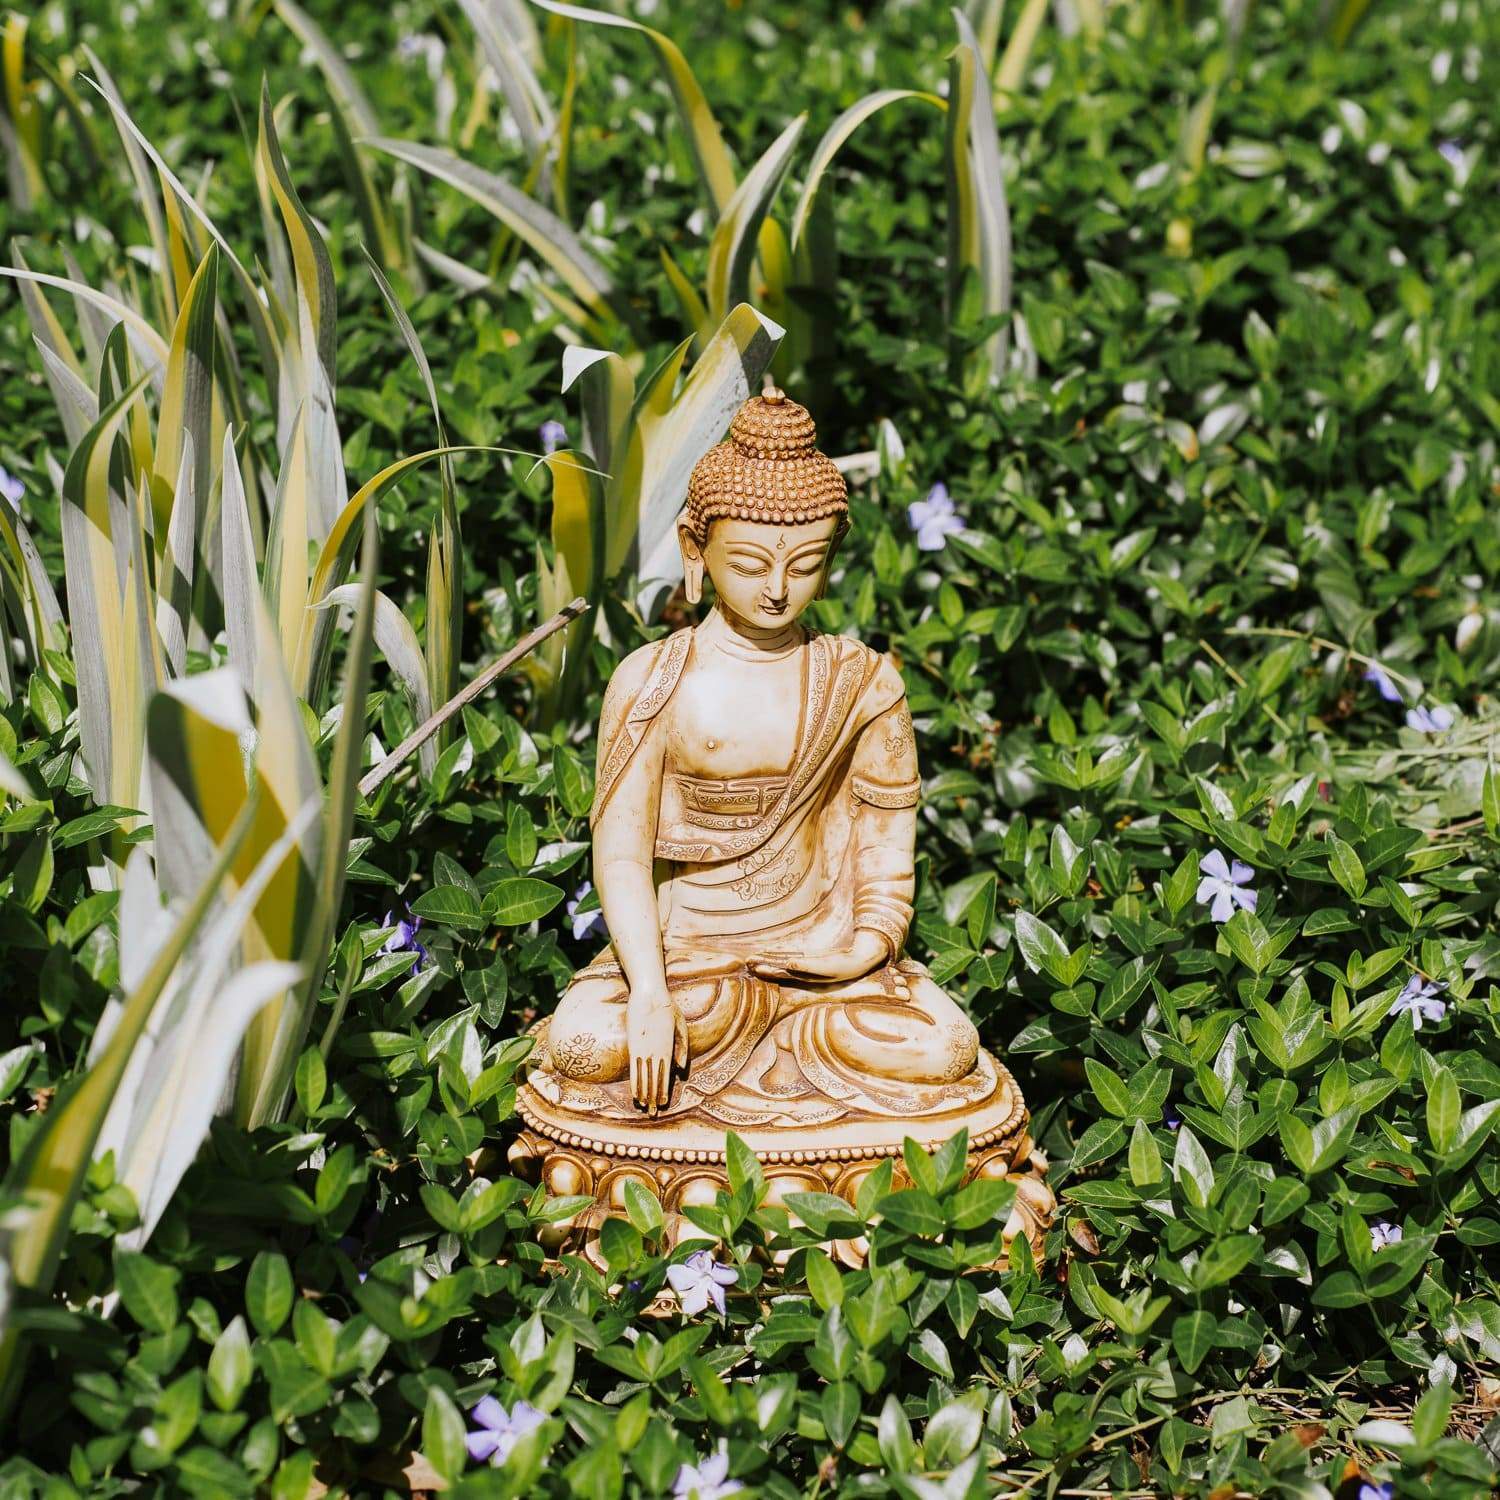 Serene Buddha Garden Statue